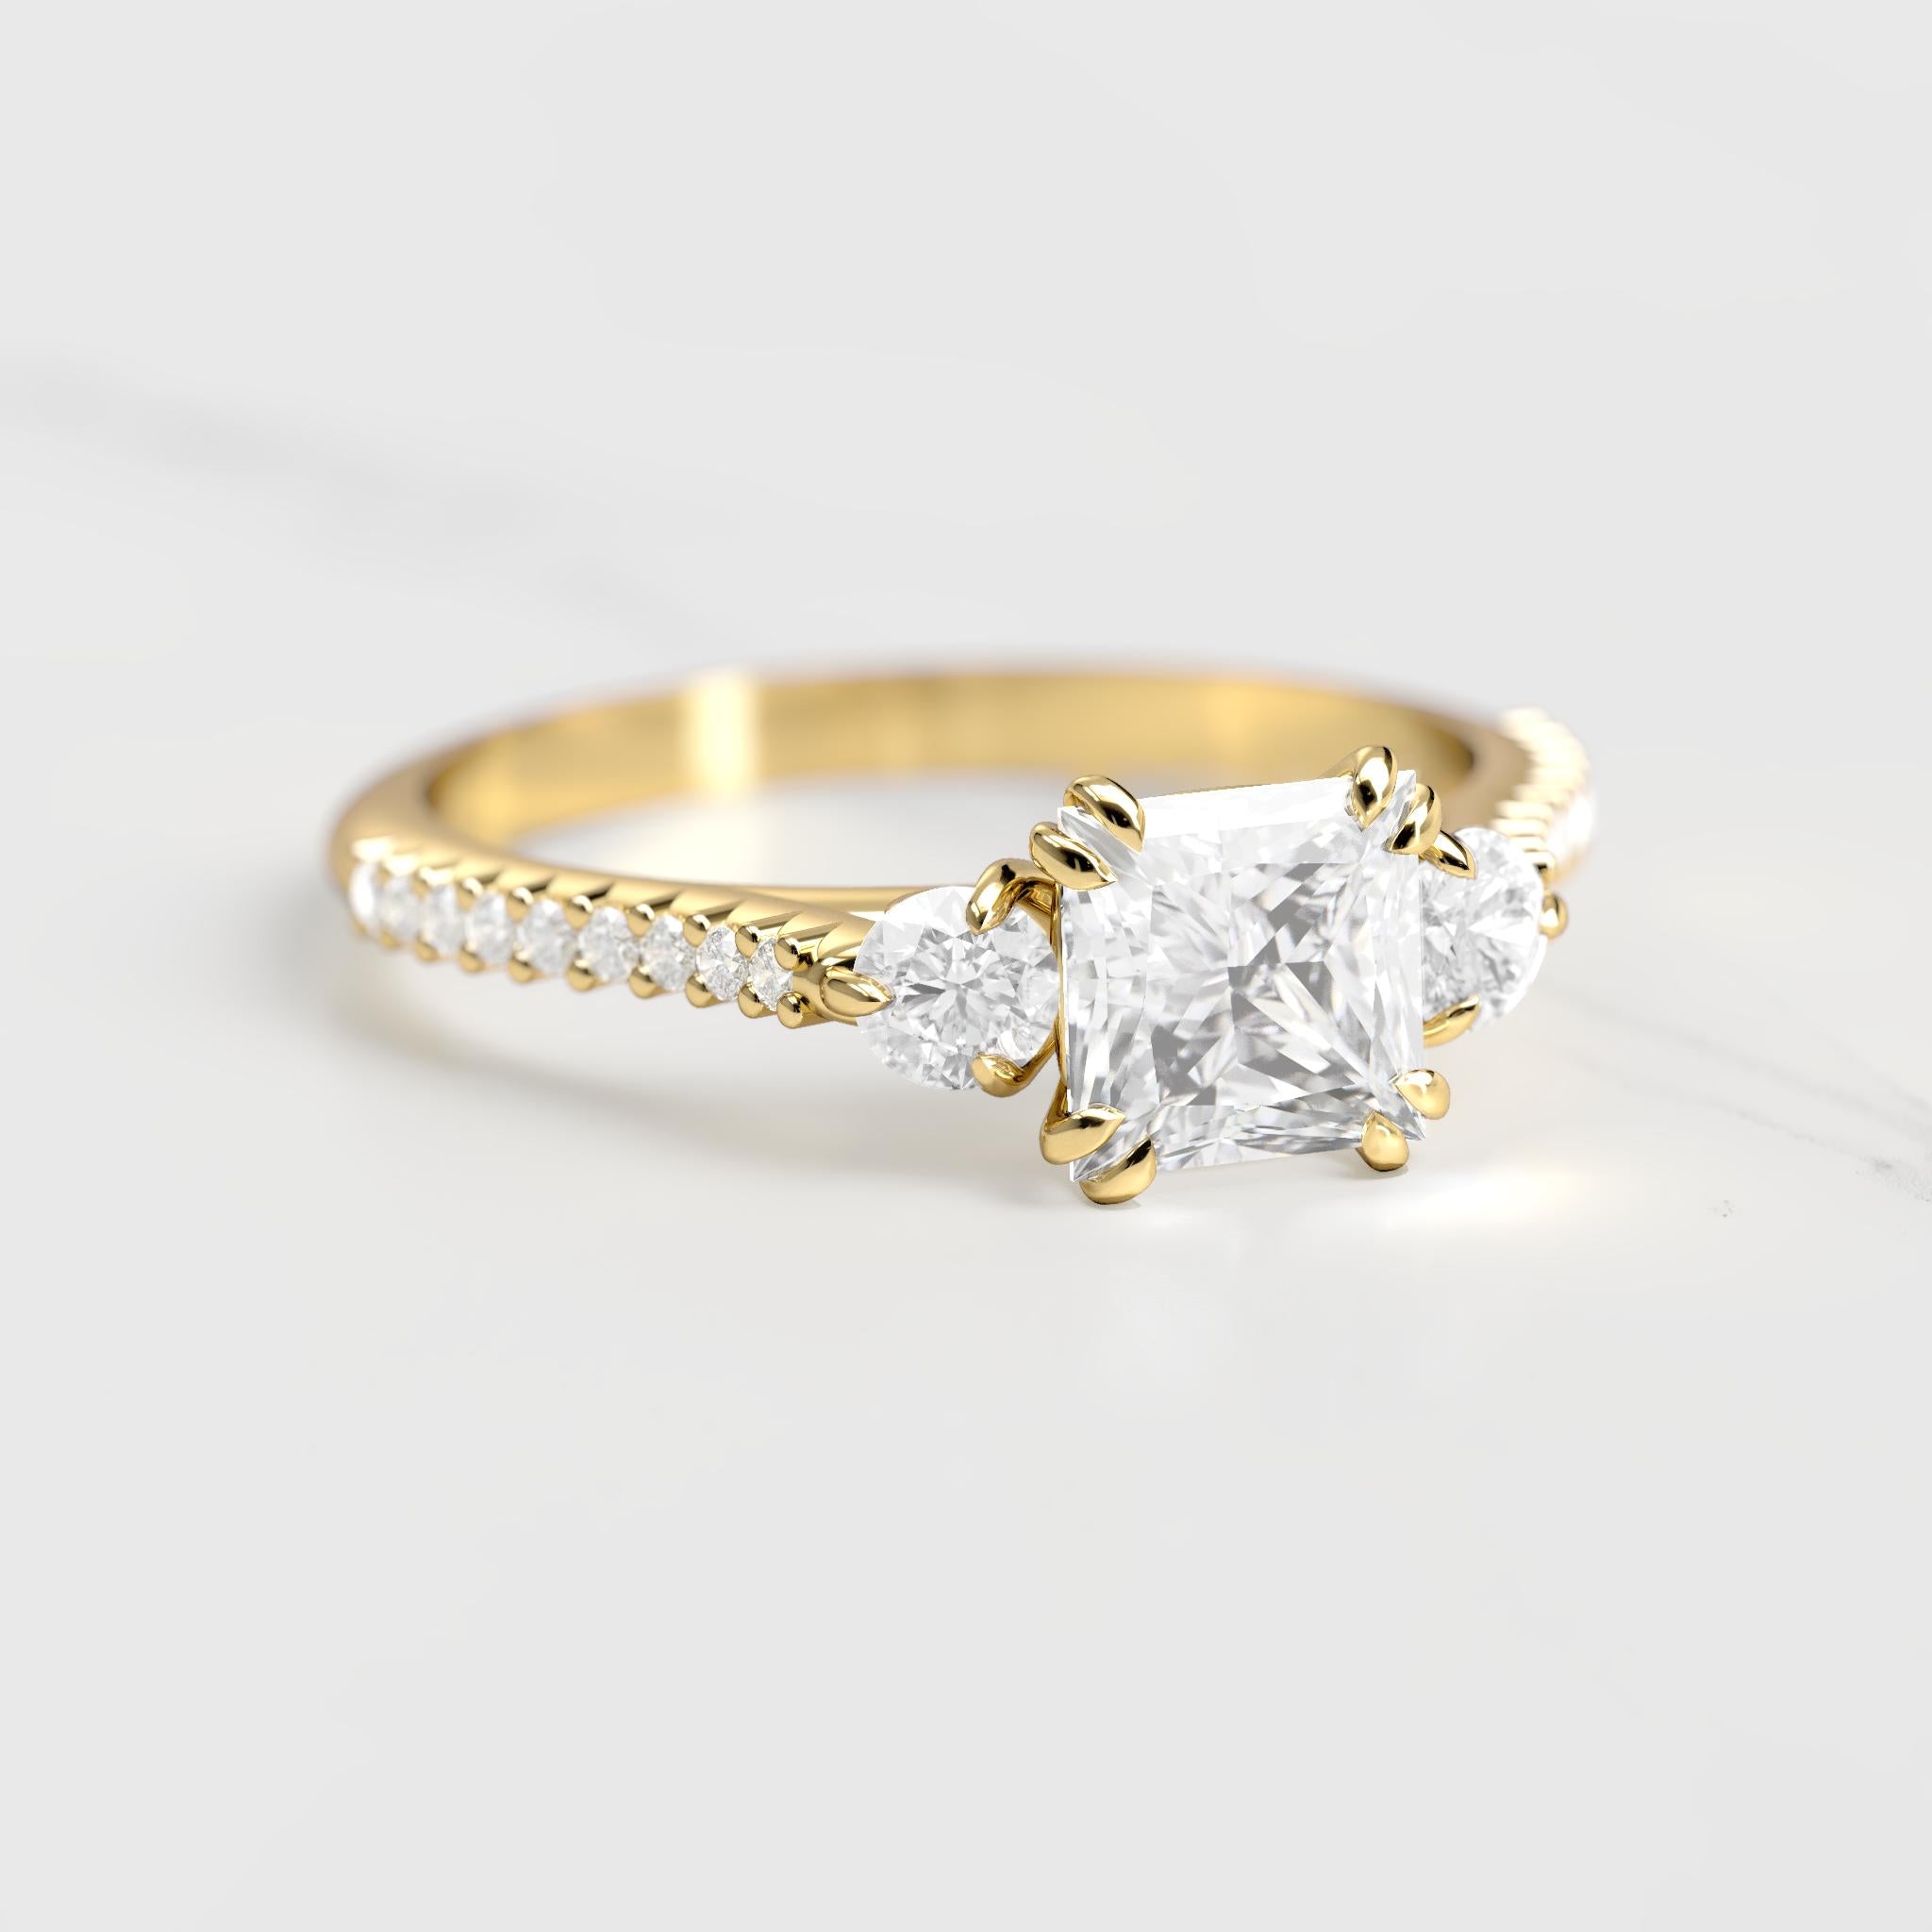 PRINCESS HALF PAVE DIAMOND RING WITH ACCENT STONES - 14k yellow gold / 1.50ct / lab diamond